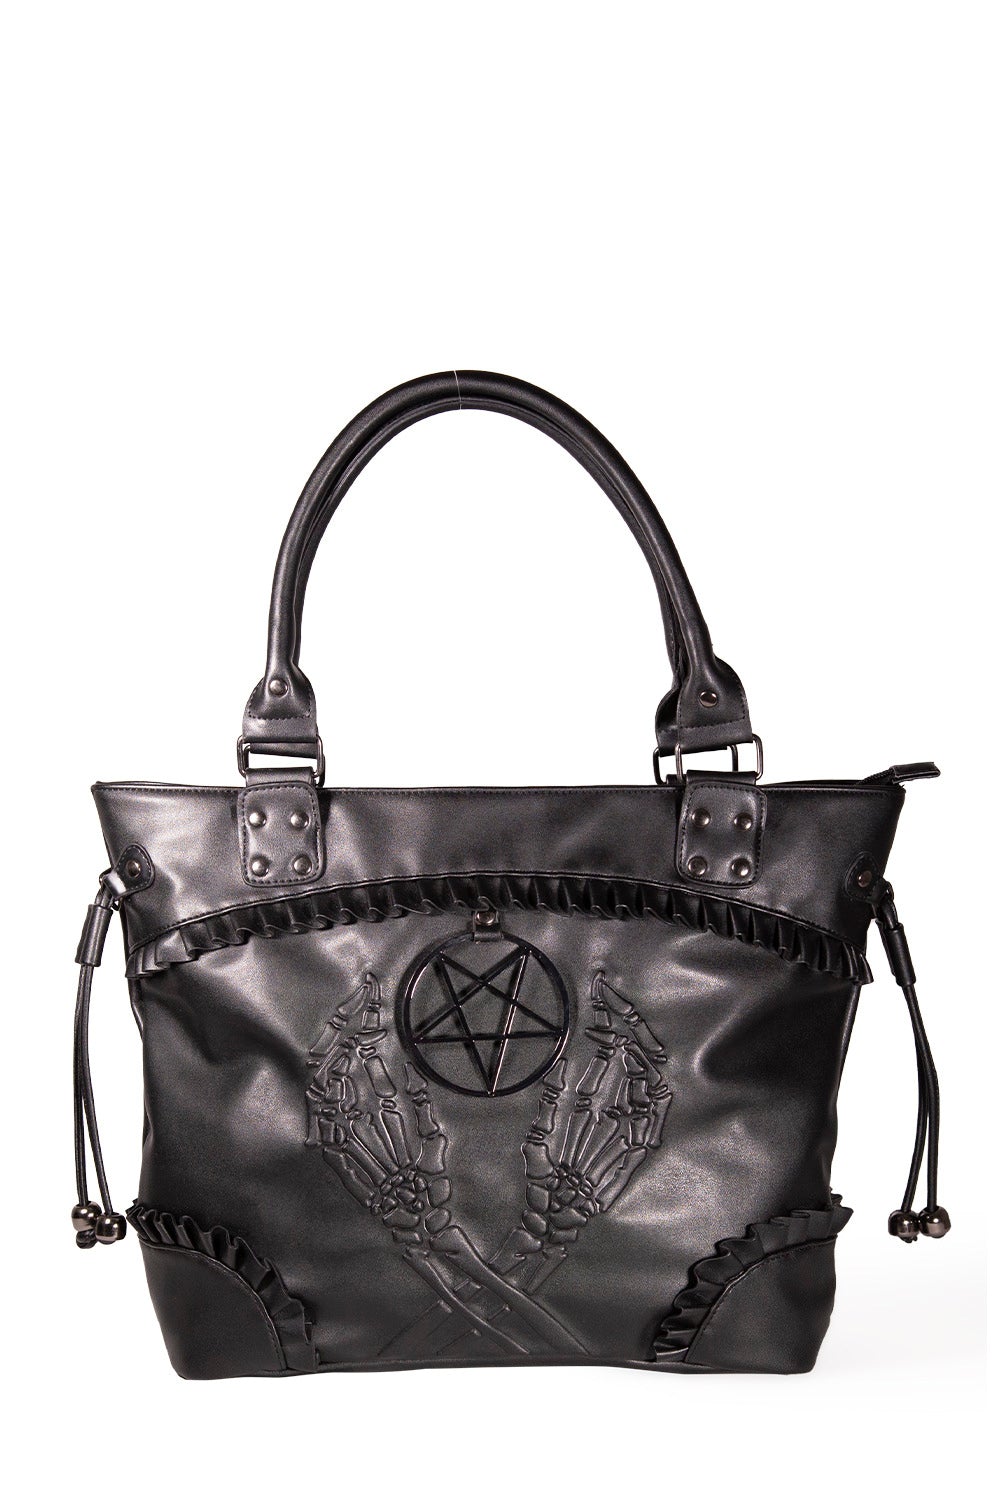 Black tote styled hand bag with black frills, embossed skeleton hands and pentagram. 